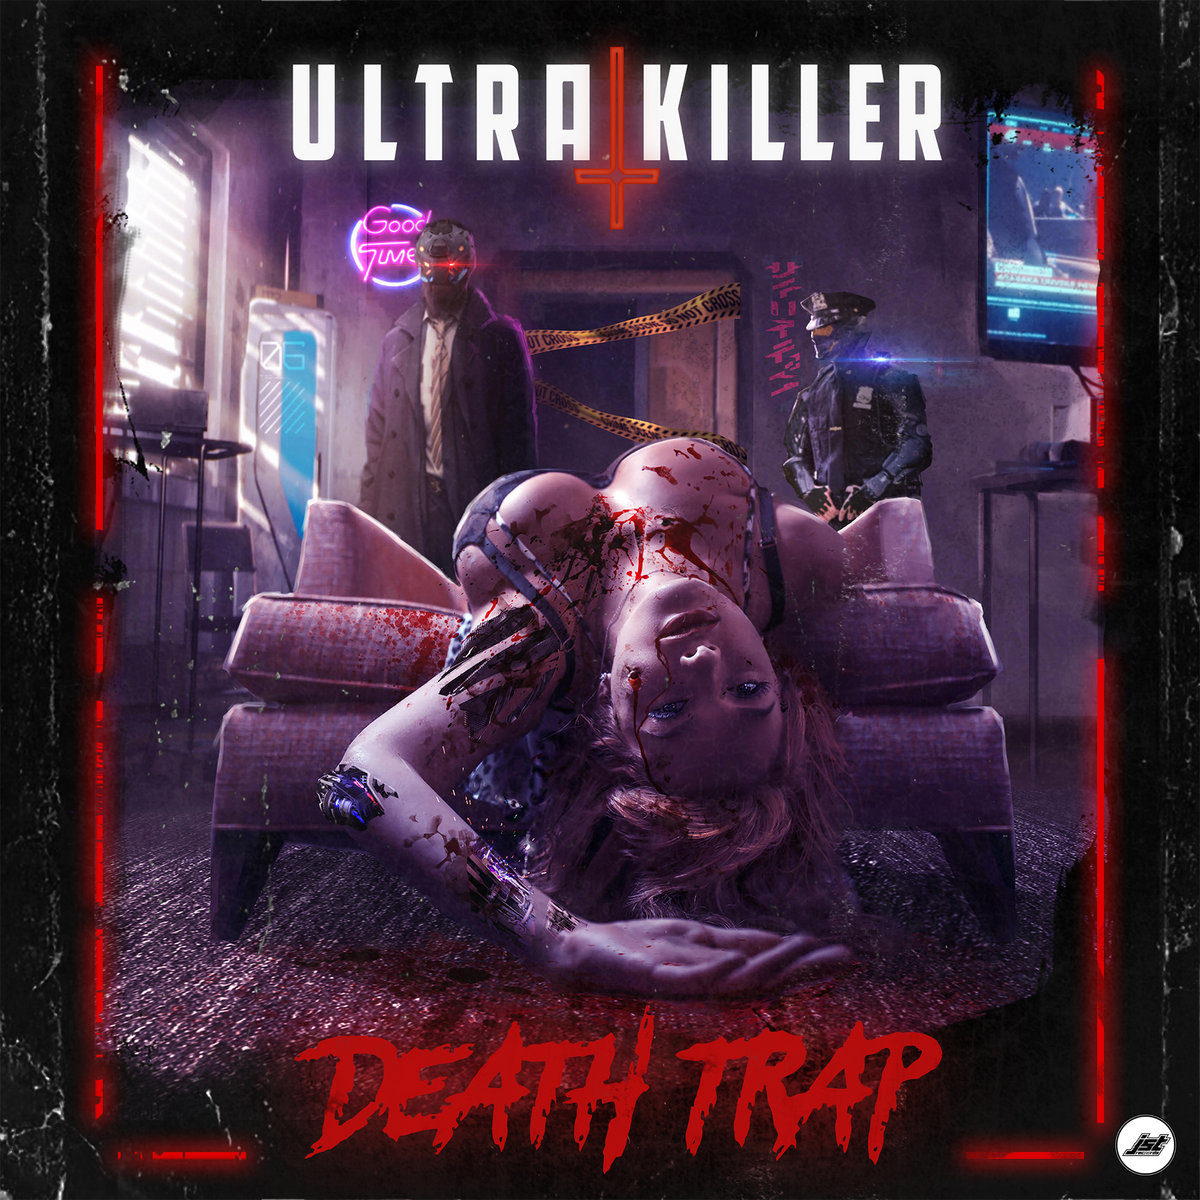 a1971218868 10 - UltraKiller’s 'Death Trap' is cyberpunk carnage